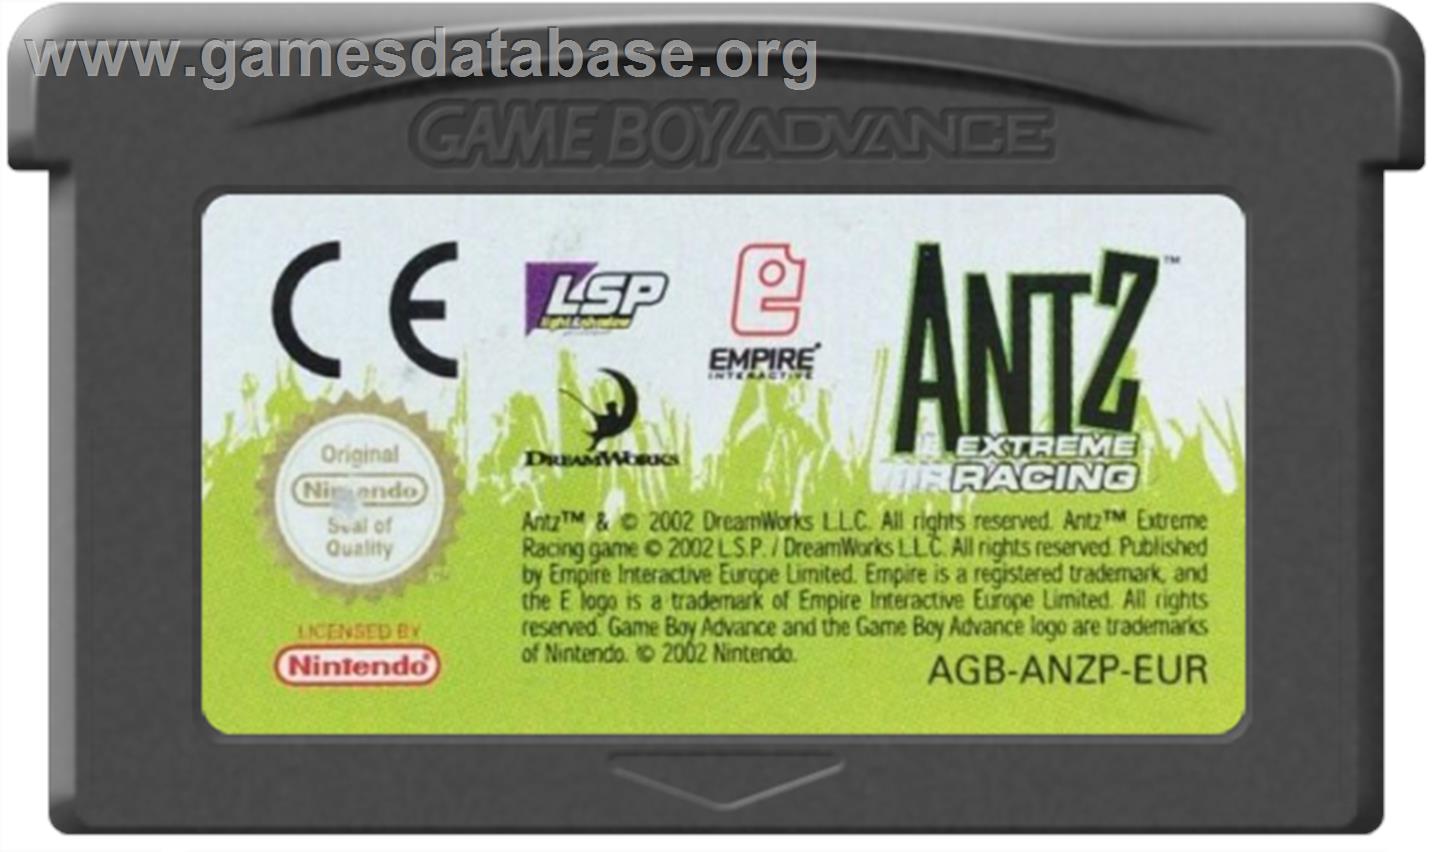 Antz Extreme Racing - Nintendo Game Boy Advance - Artwork - Cartridge